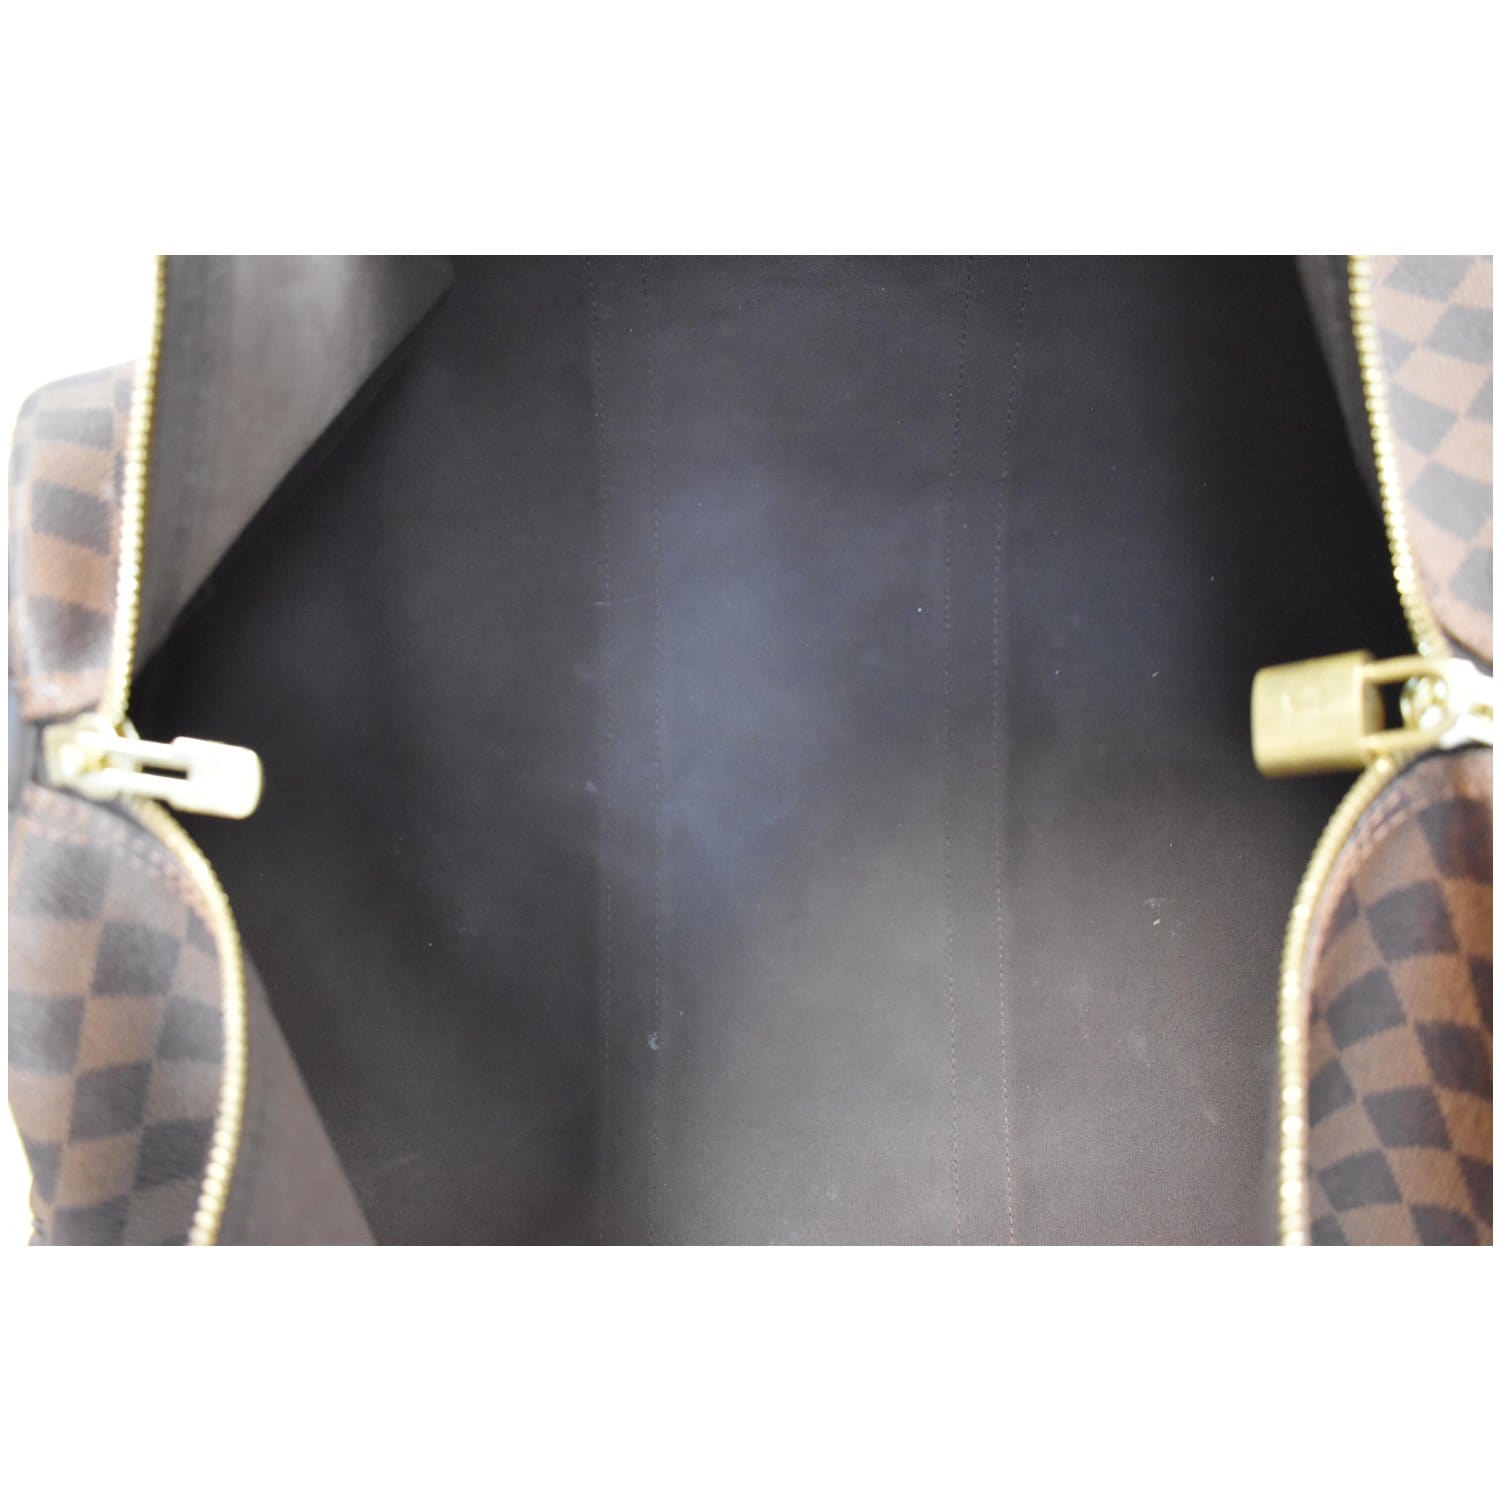 Louis Vuitton keepall bandouliere 55 damier ebene – Lady Clara's